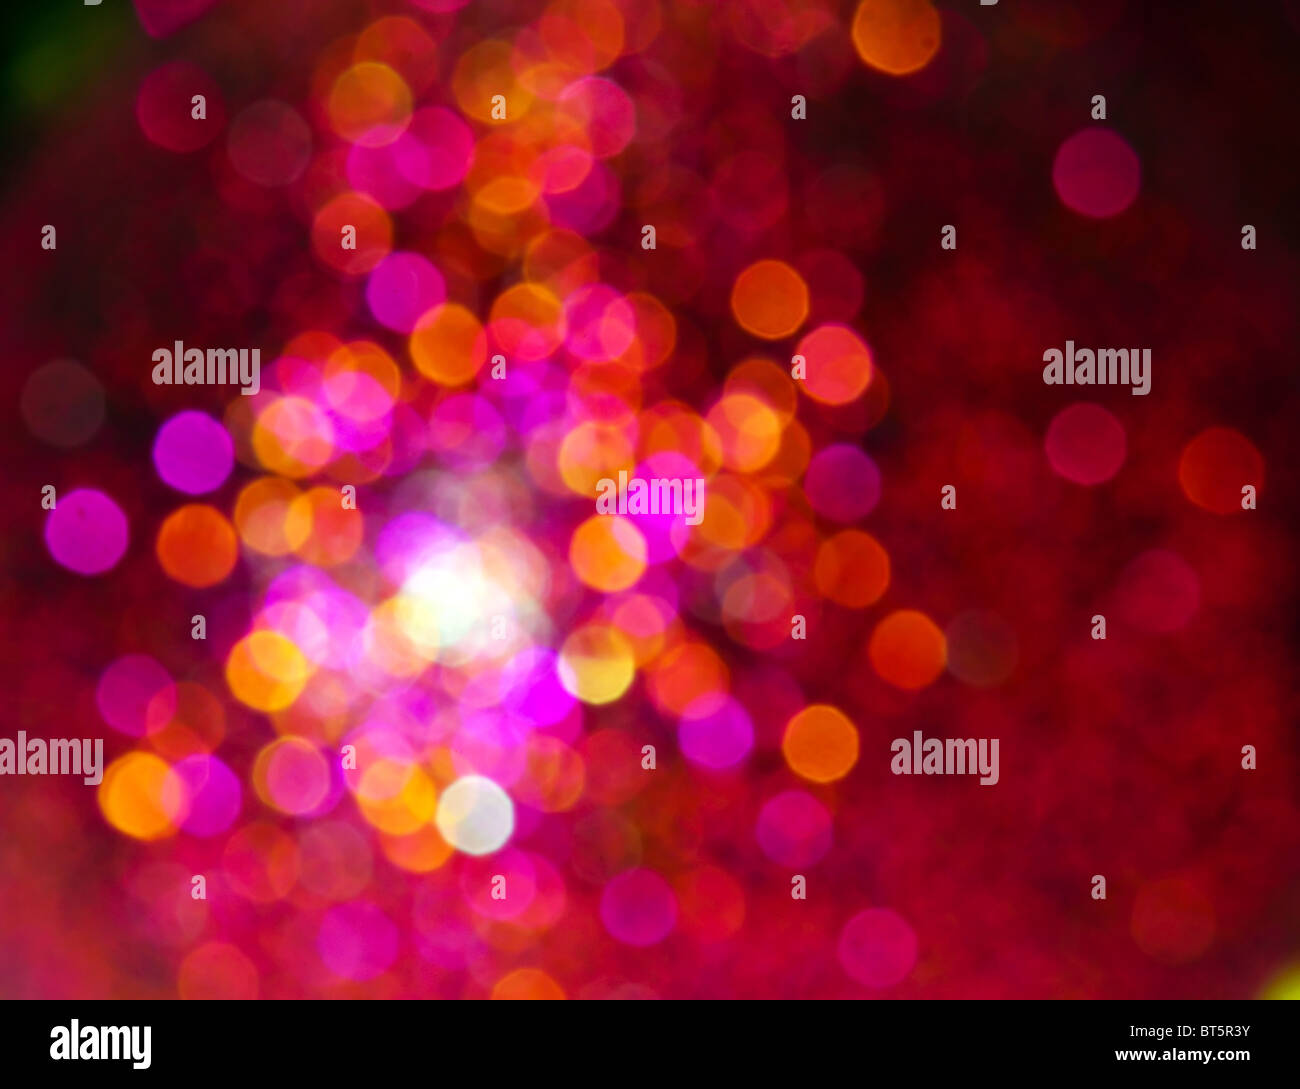 glowing Christmas light background Stock Photo